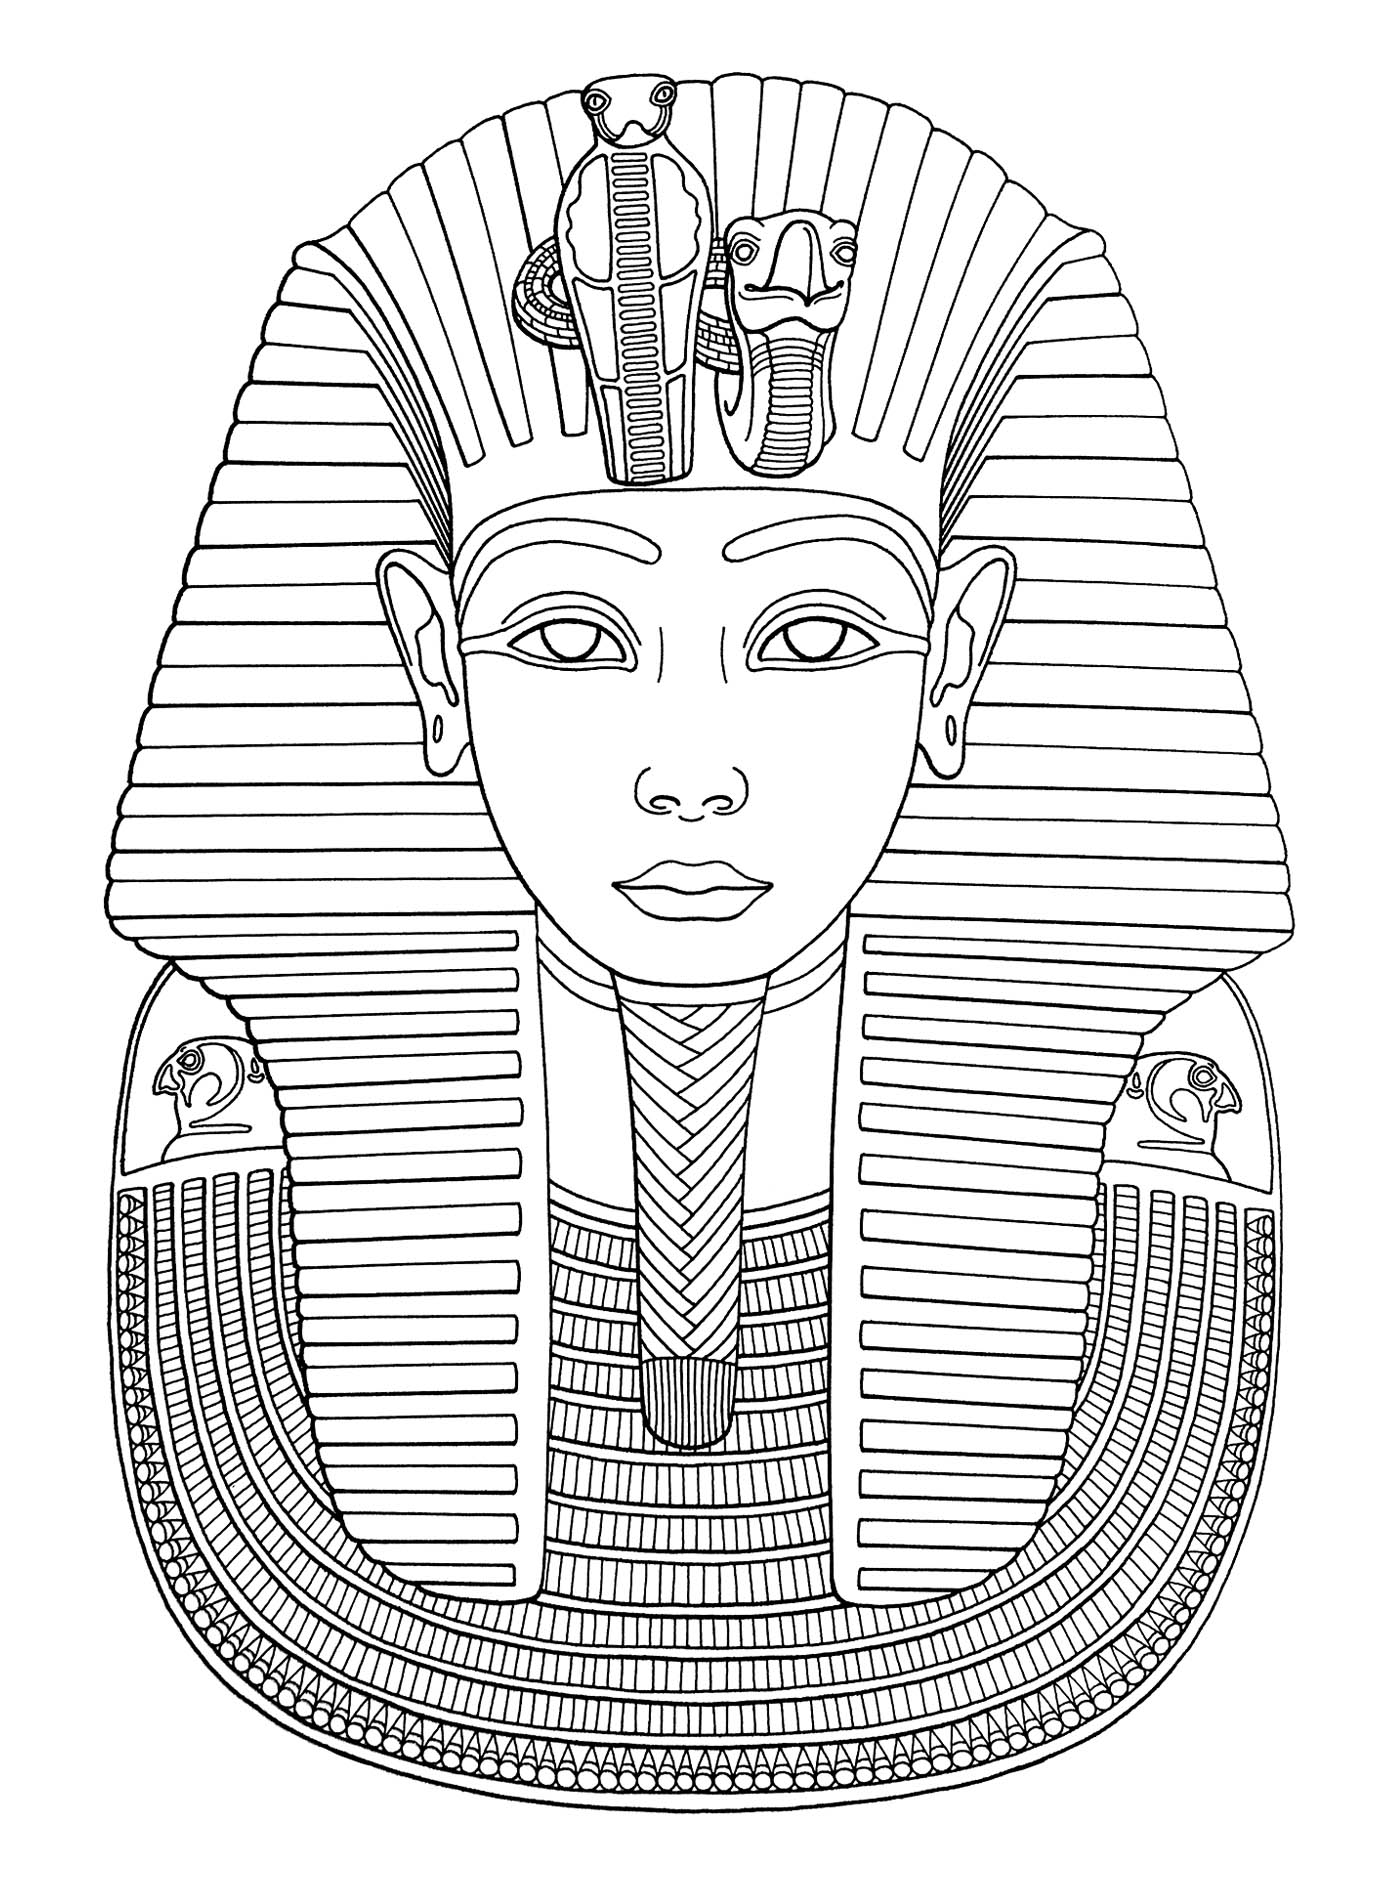 Mask of the pharaoh Tutankhamun - Egypt Kids Coloring Pages